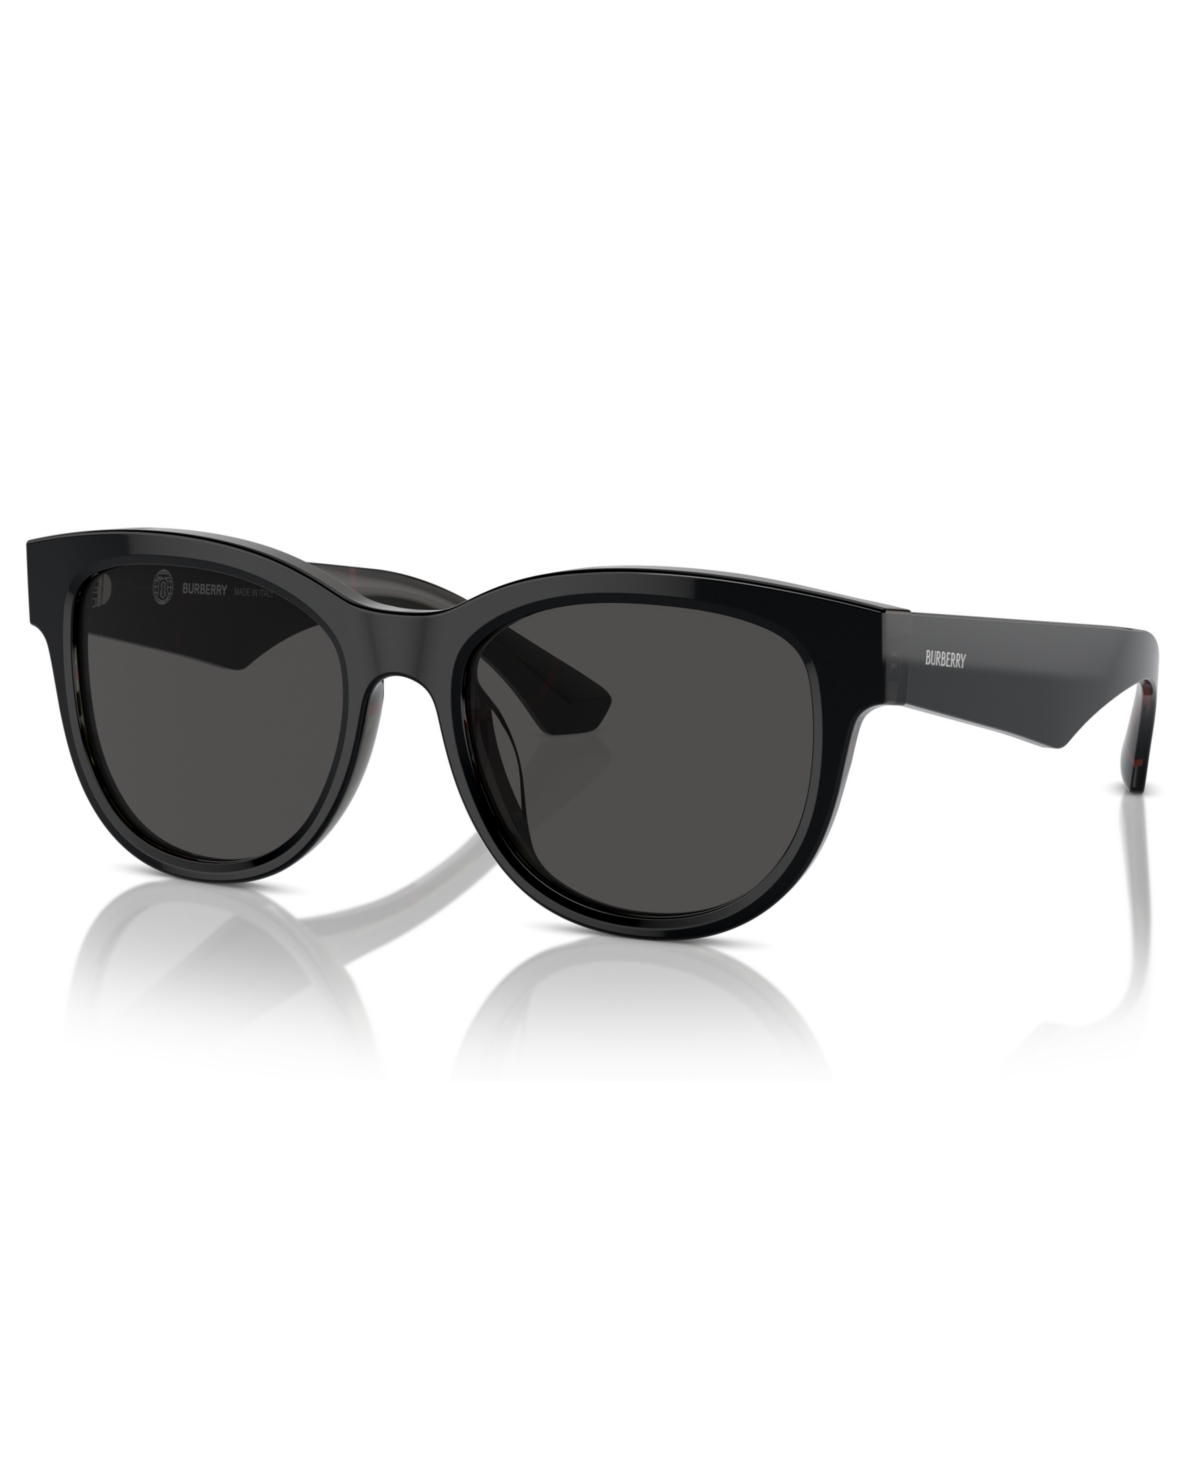 Women's Sunglasses, Be4432U - Top Black on Vintage Check